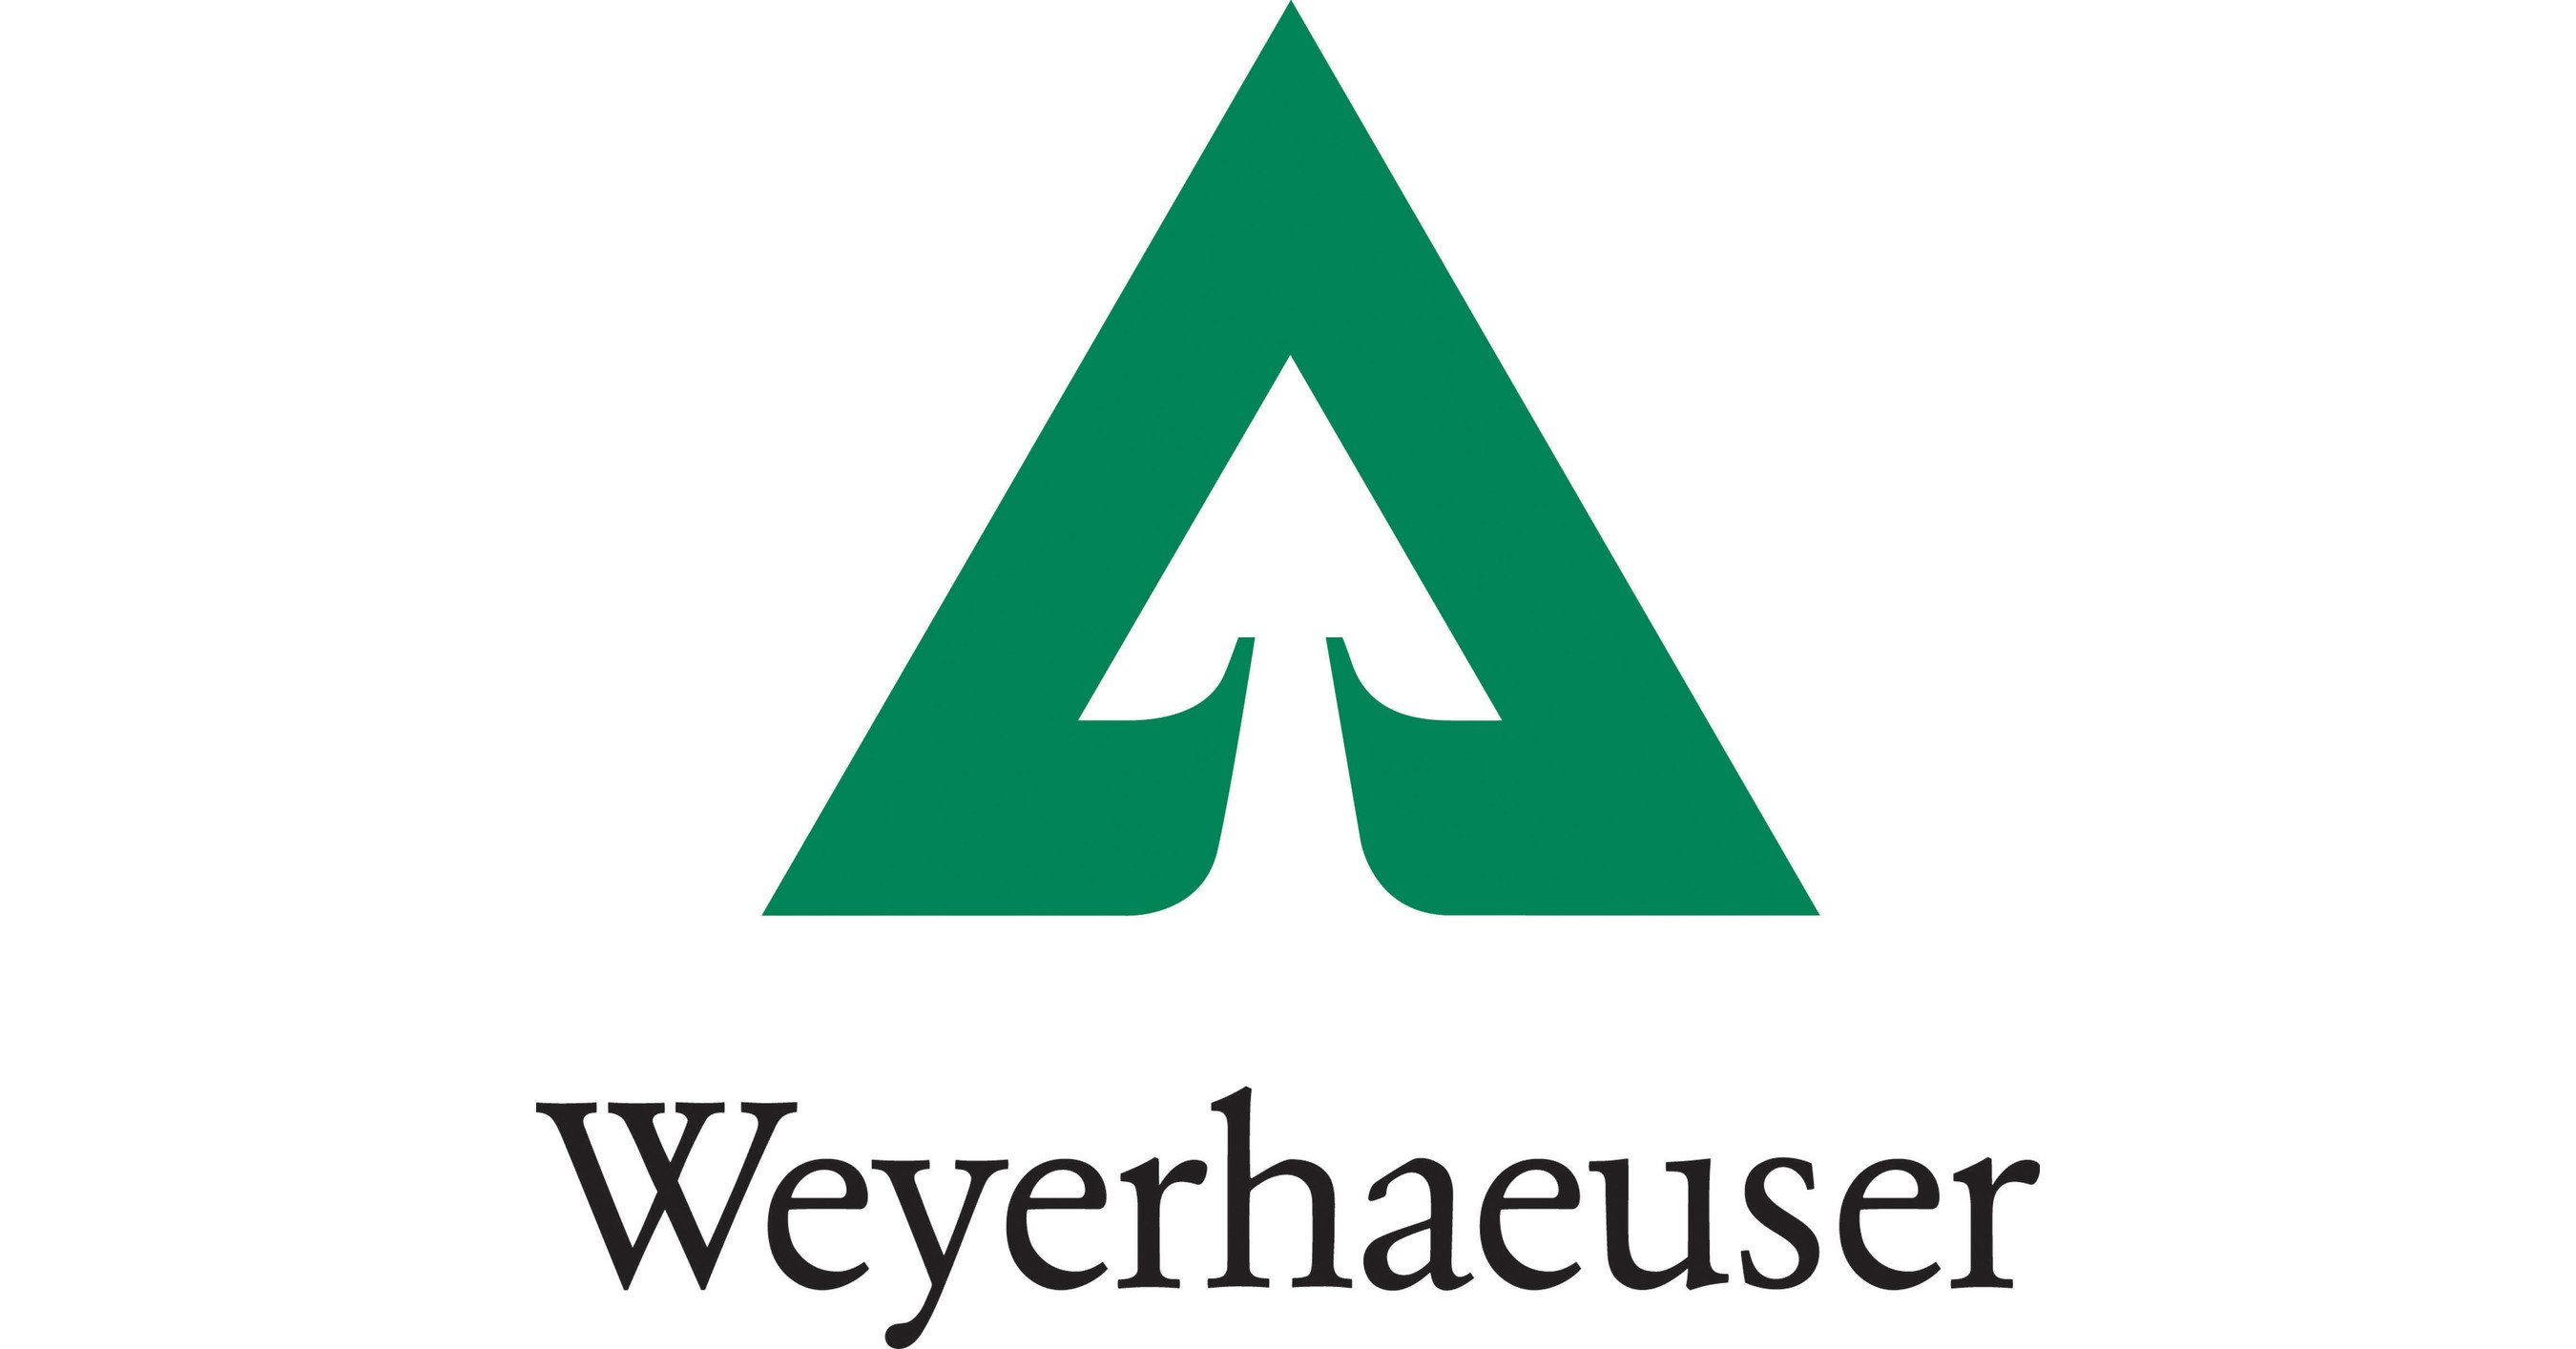 weyerhaeuser_company_logo